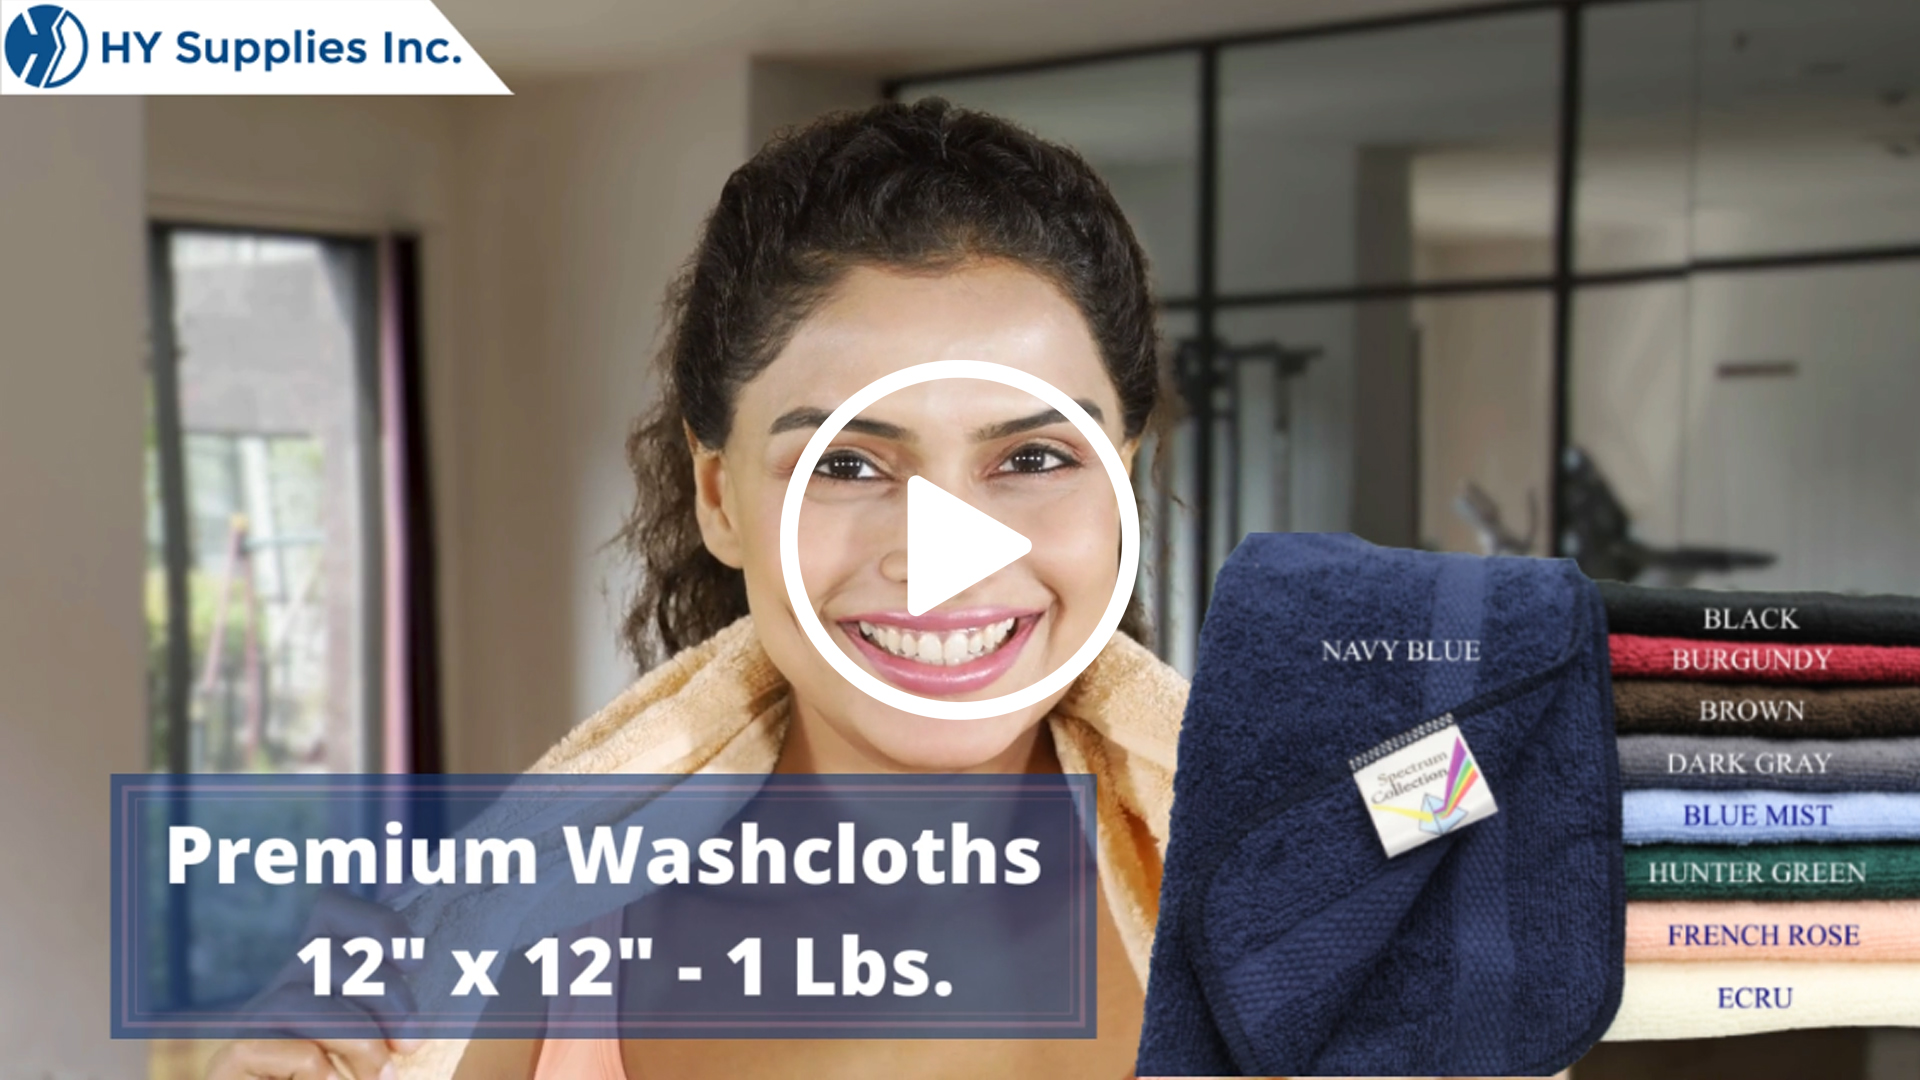 Premium Washcloths - 12" x 12" - 1 Lbs. 